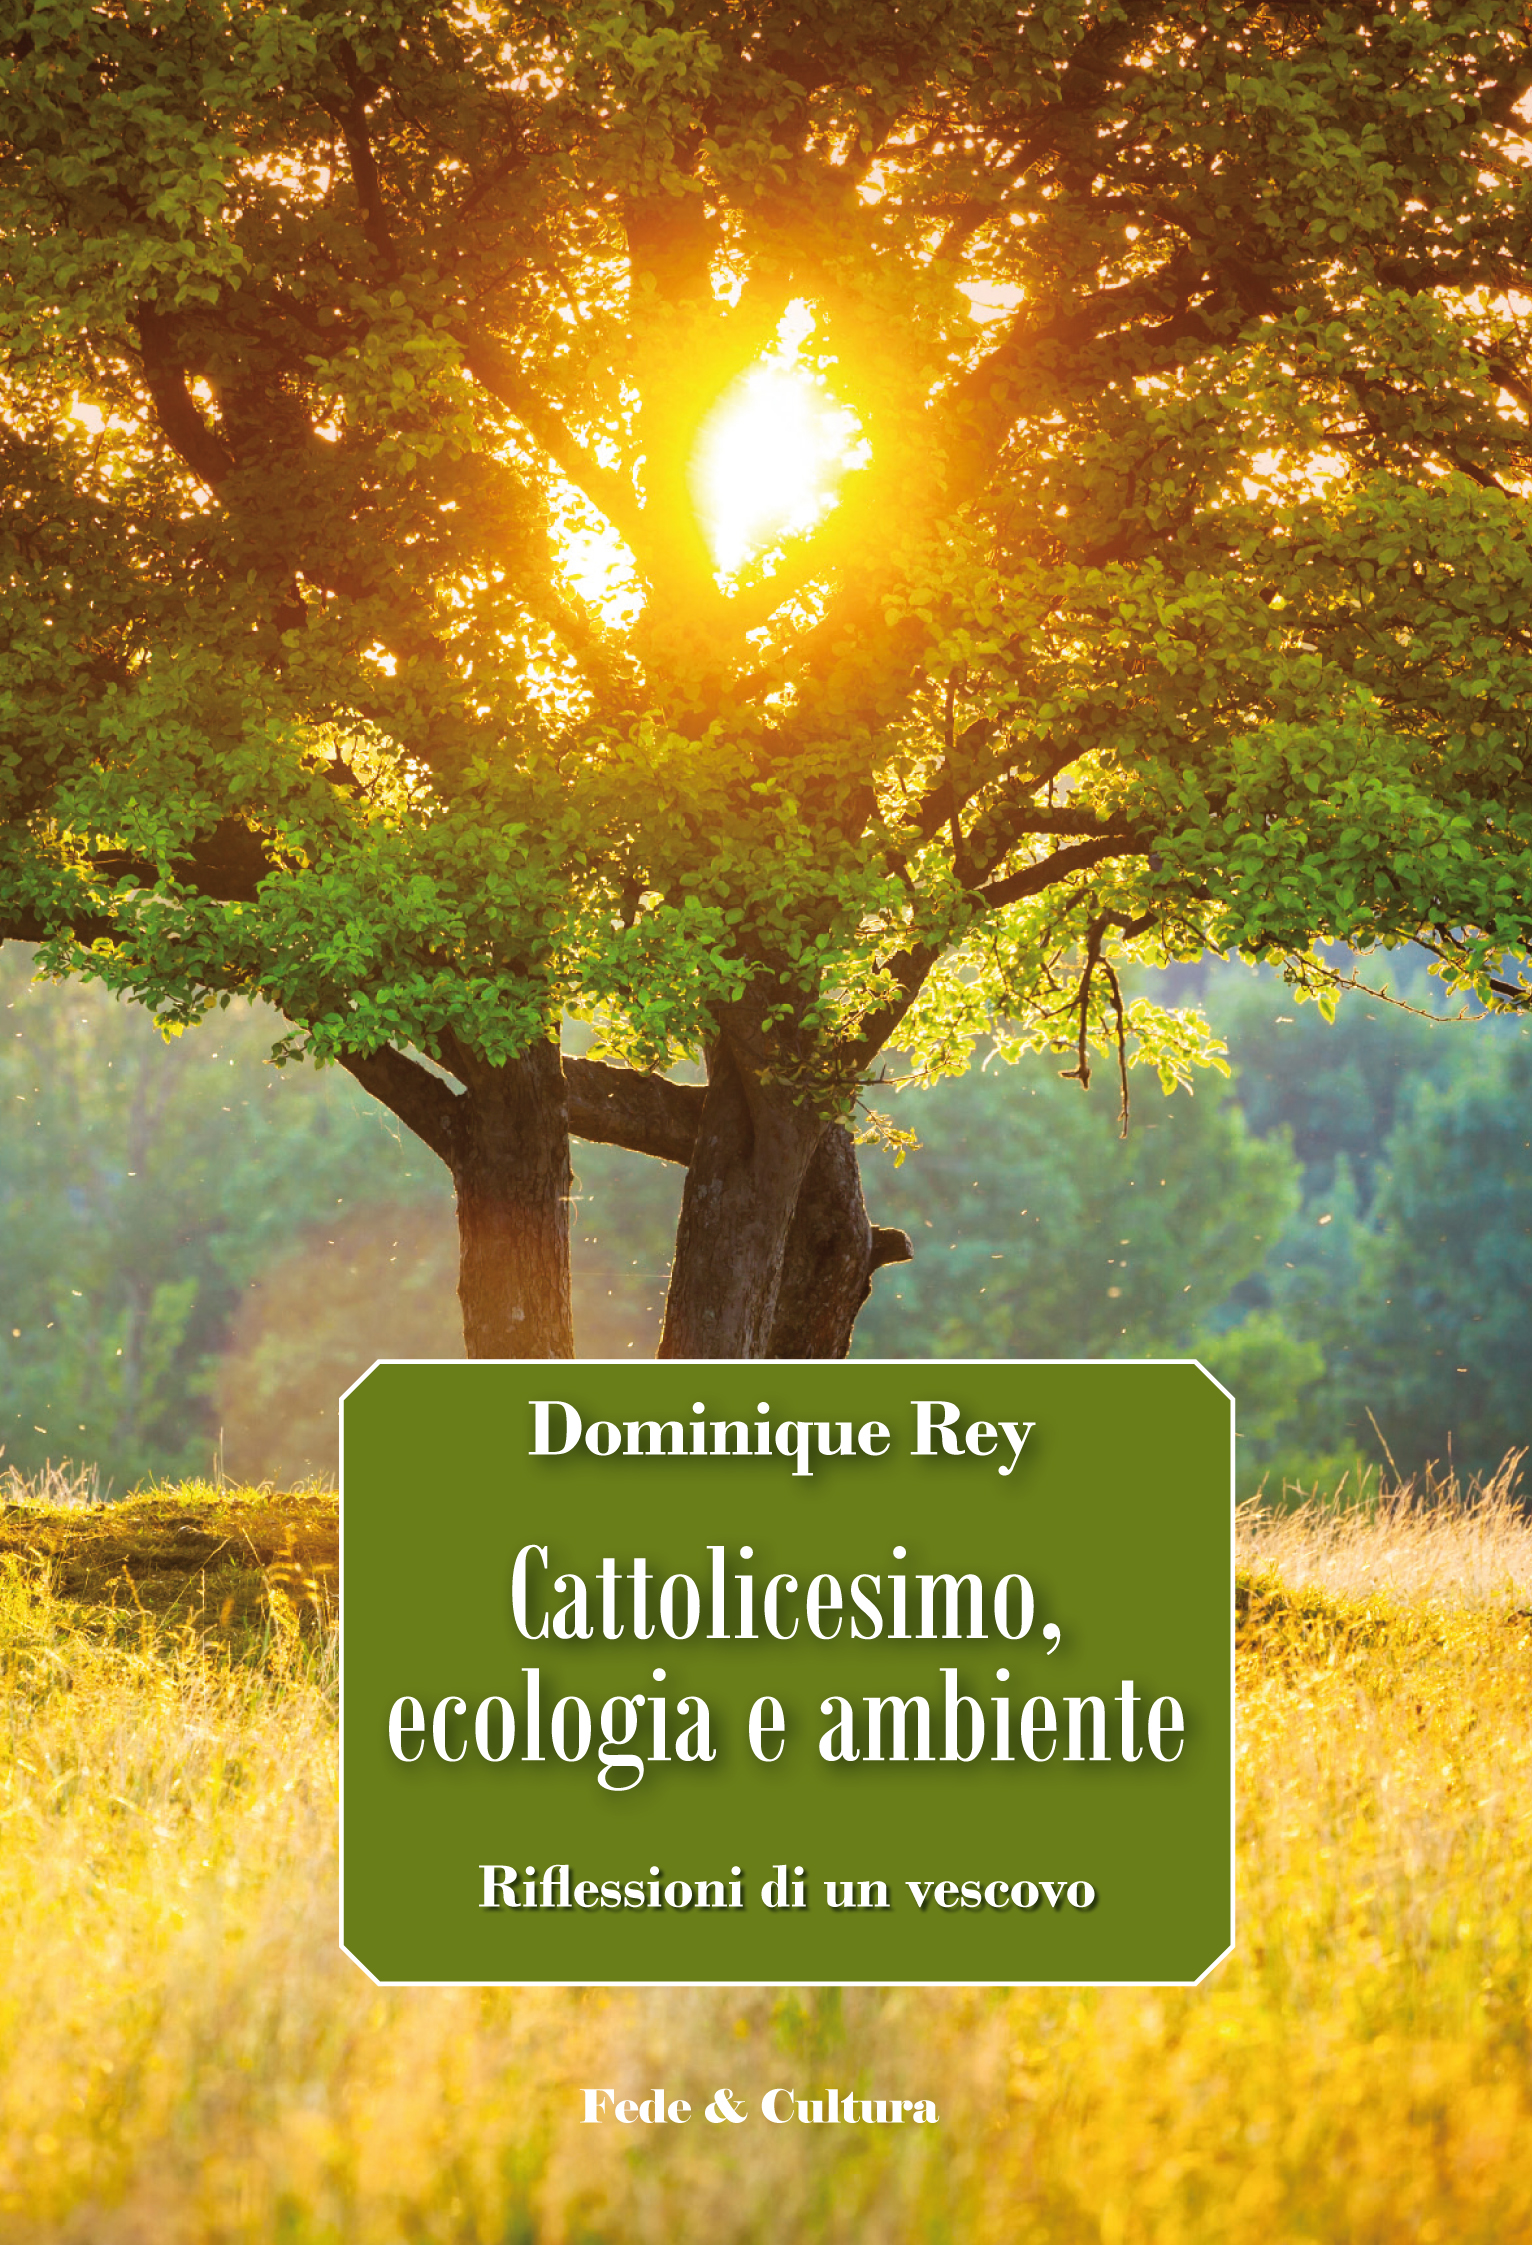 Cop Cattolicesimo ecologia e ambiente 2.indd